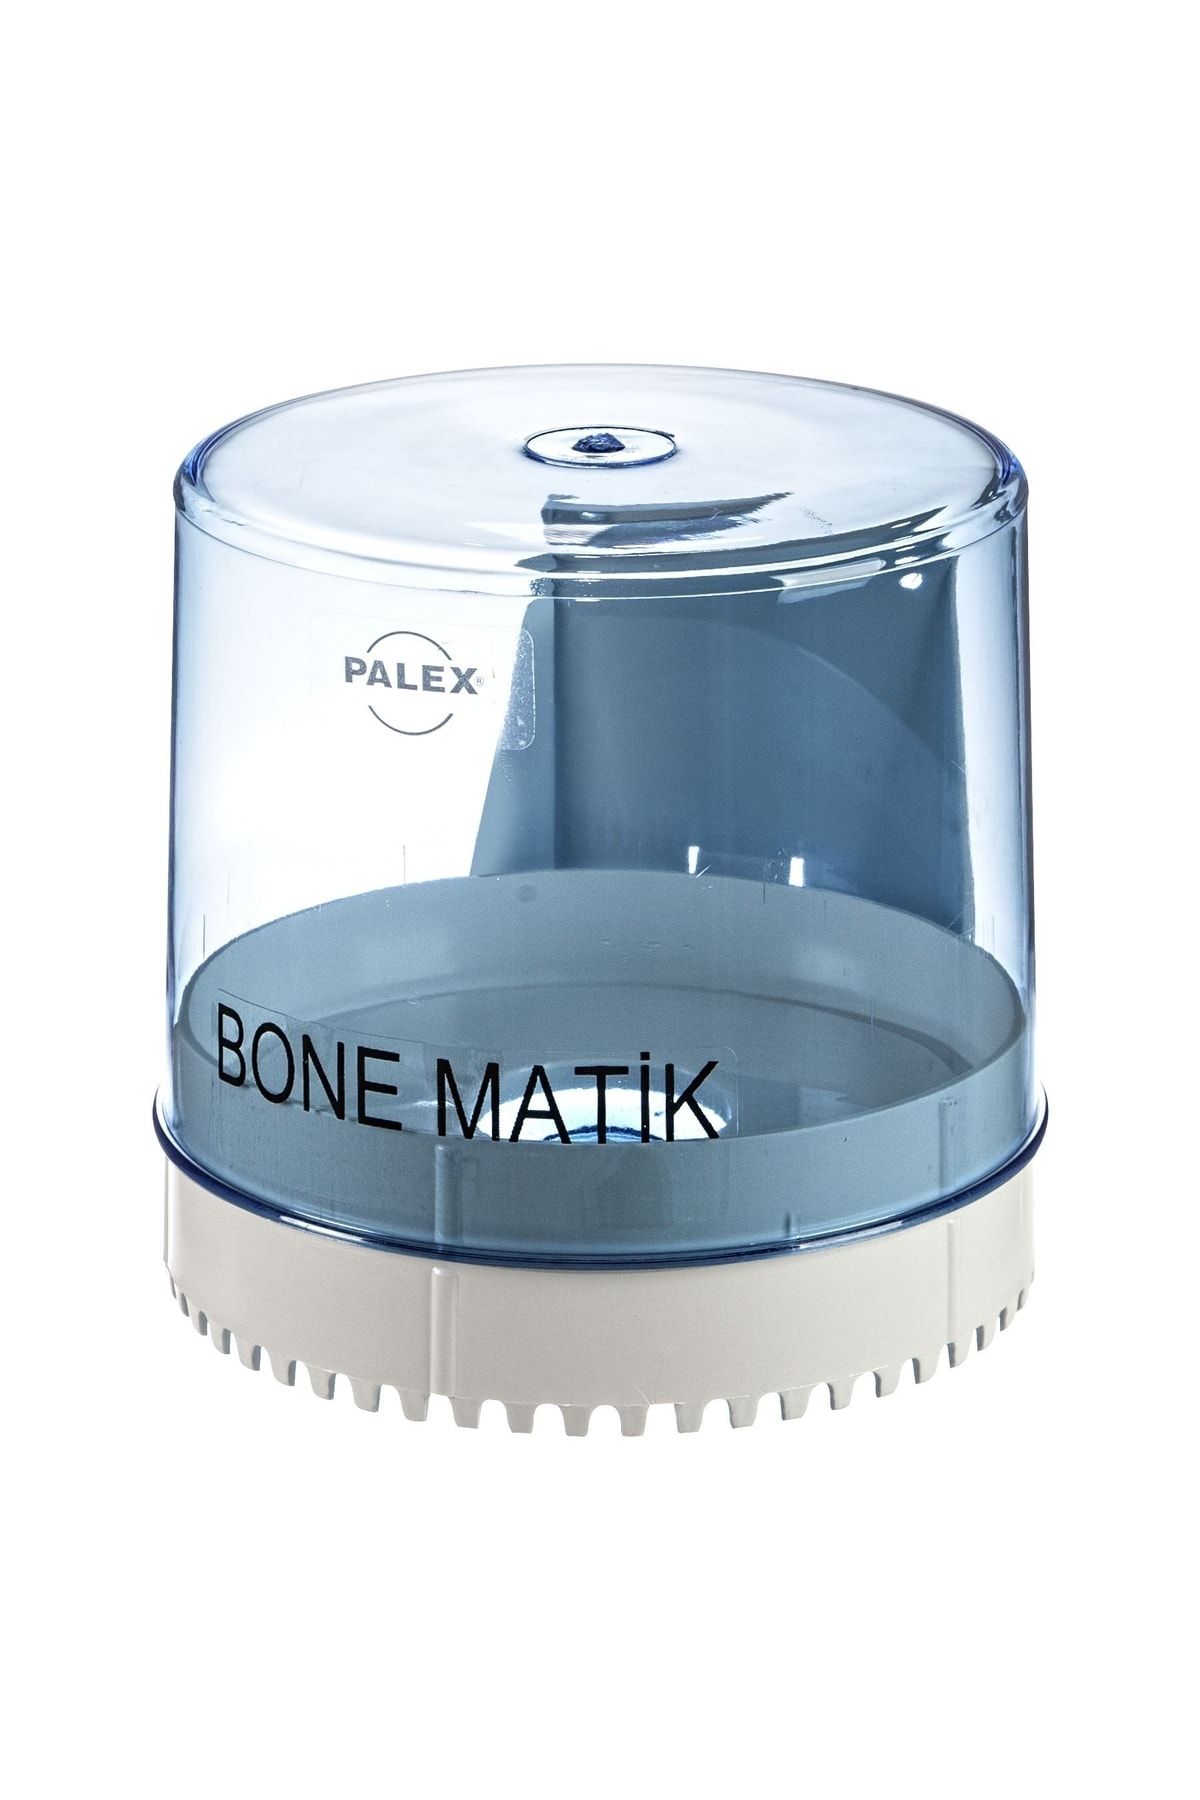 Palex (ün-ev) Bone Matik (bone Dispenseri) Şeffaf-mavi 3434